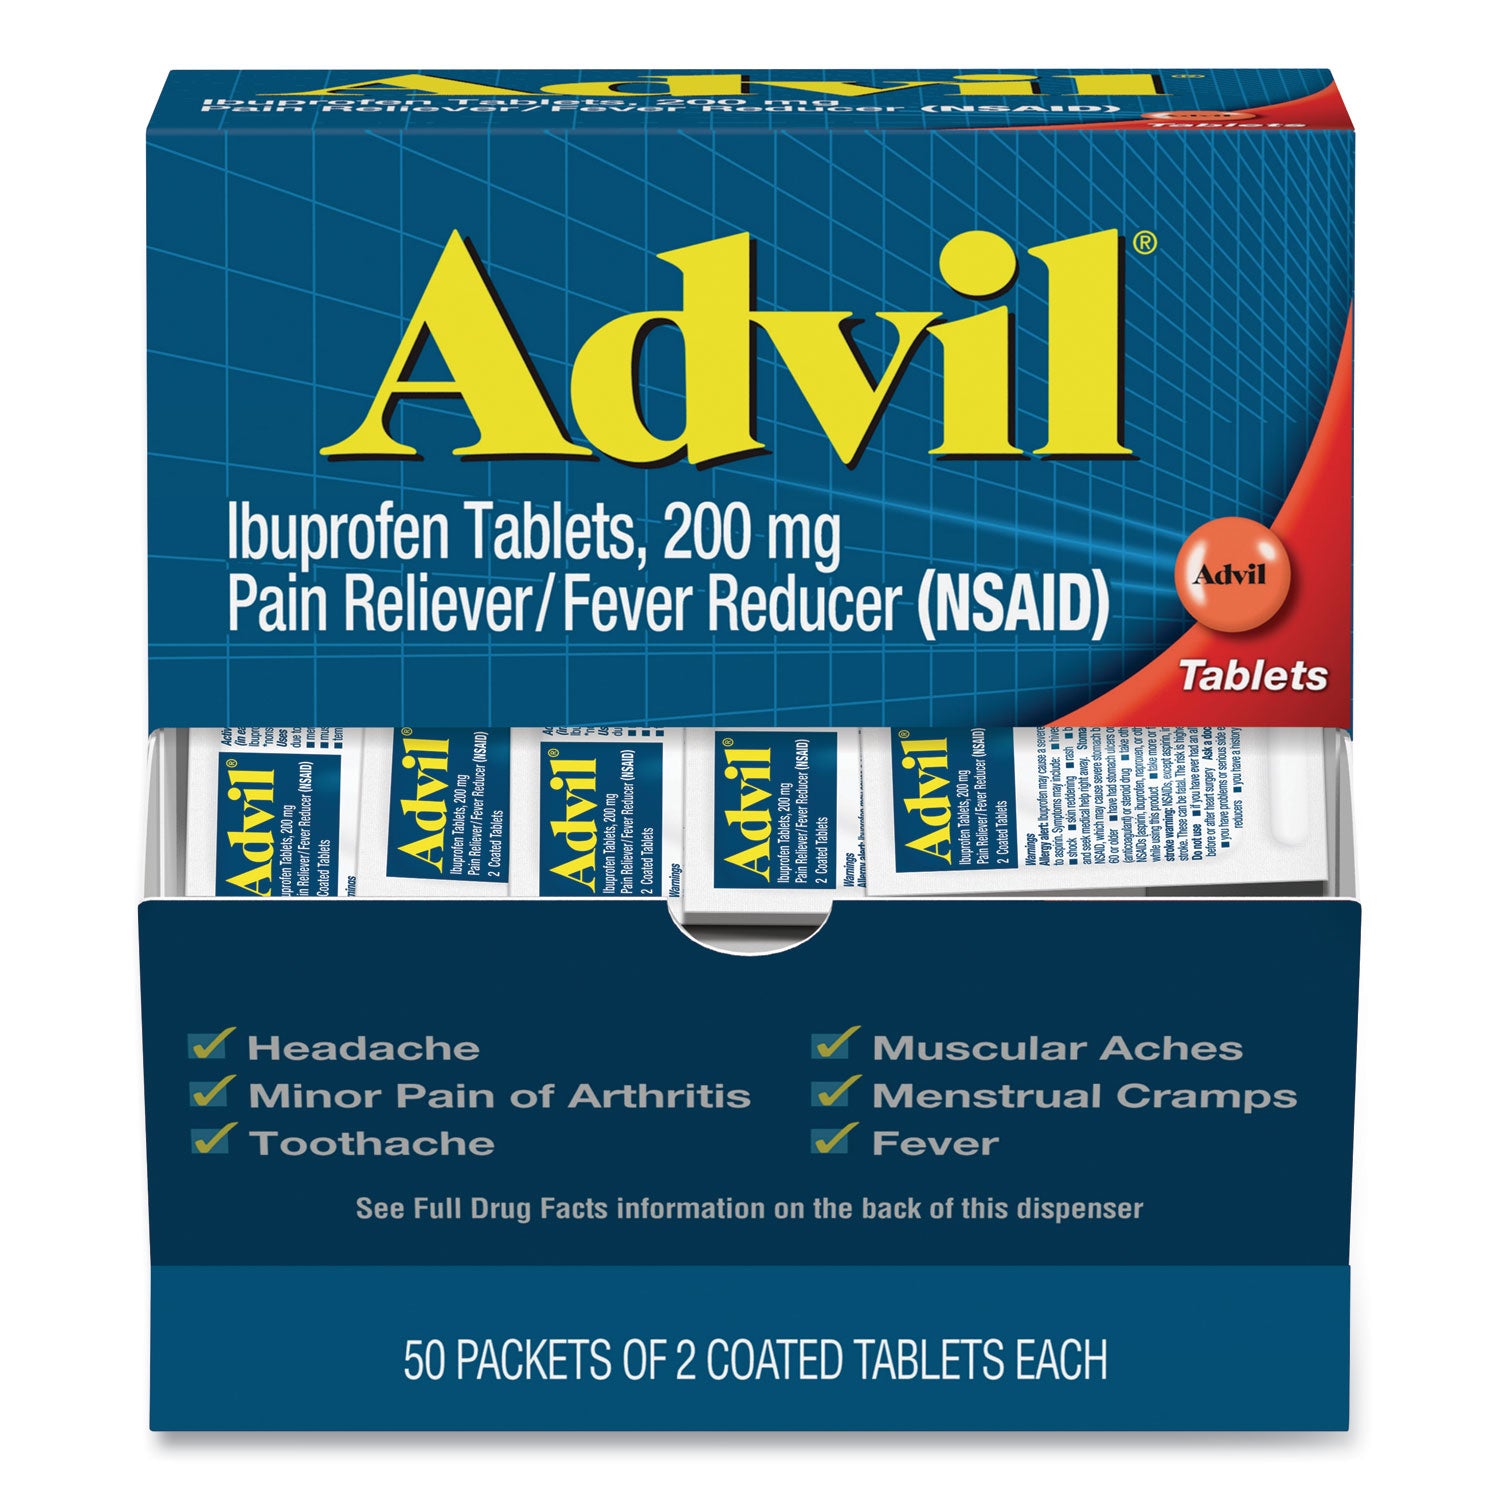 ibuprofen-tablets-two-pack-50-packs-box_pfybxavl50bx - 1